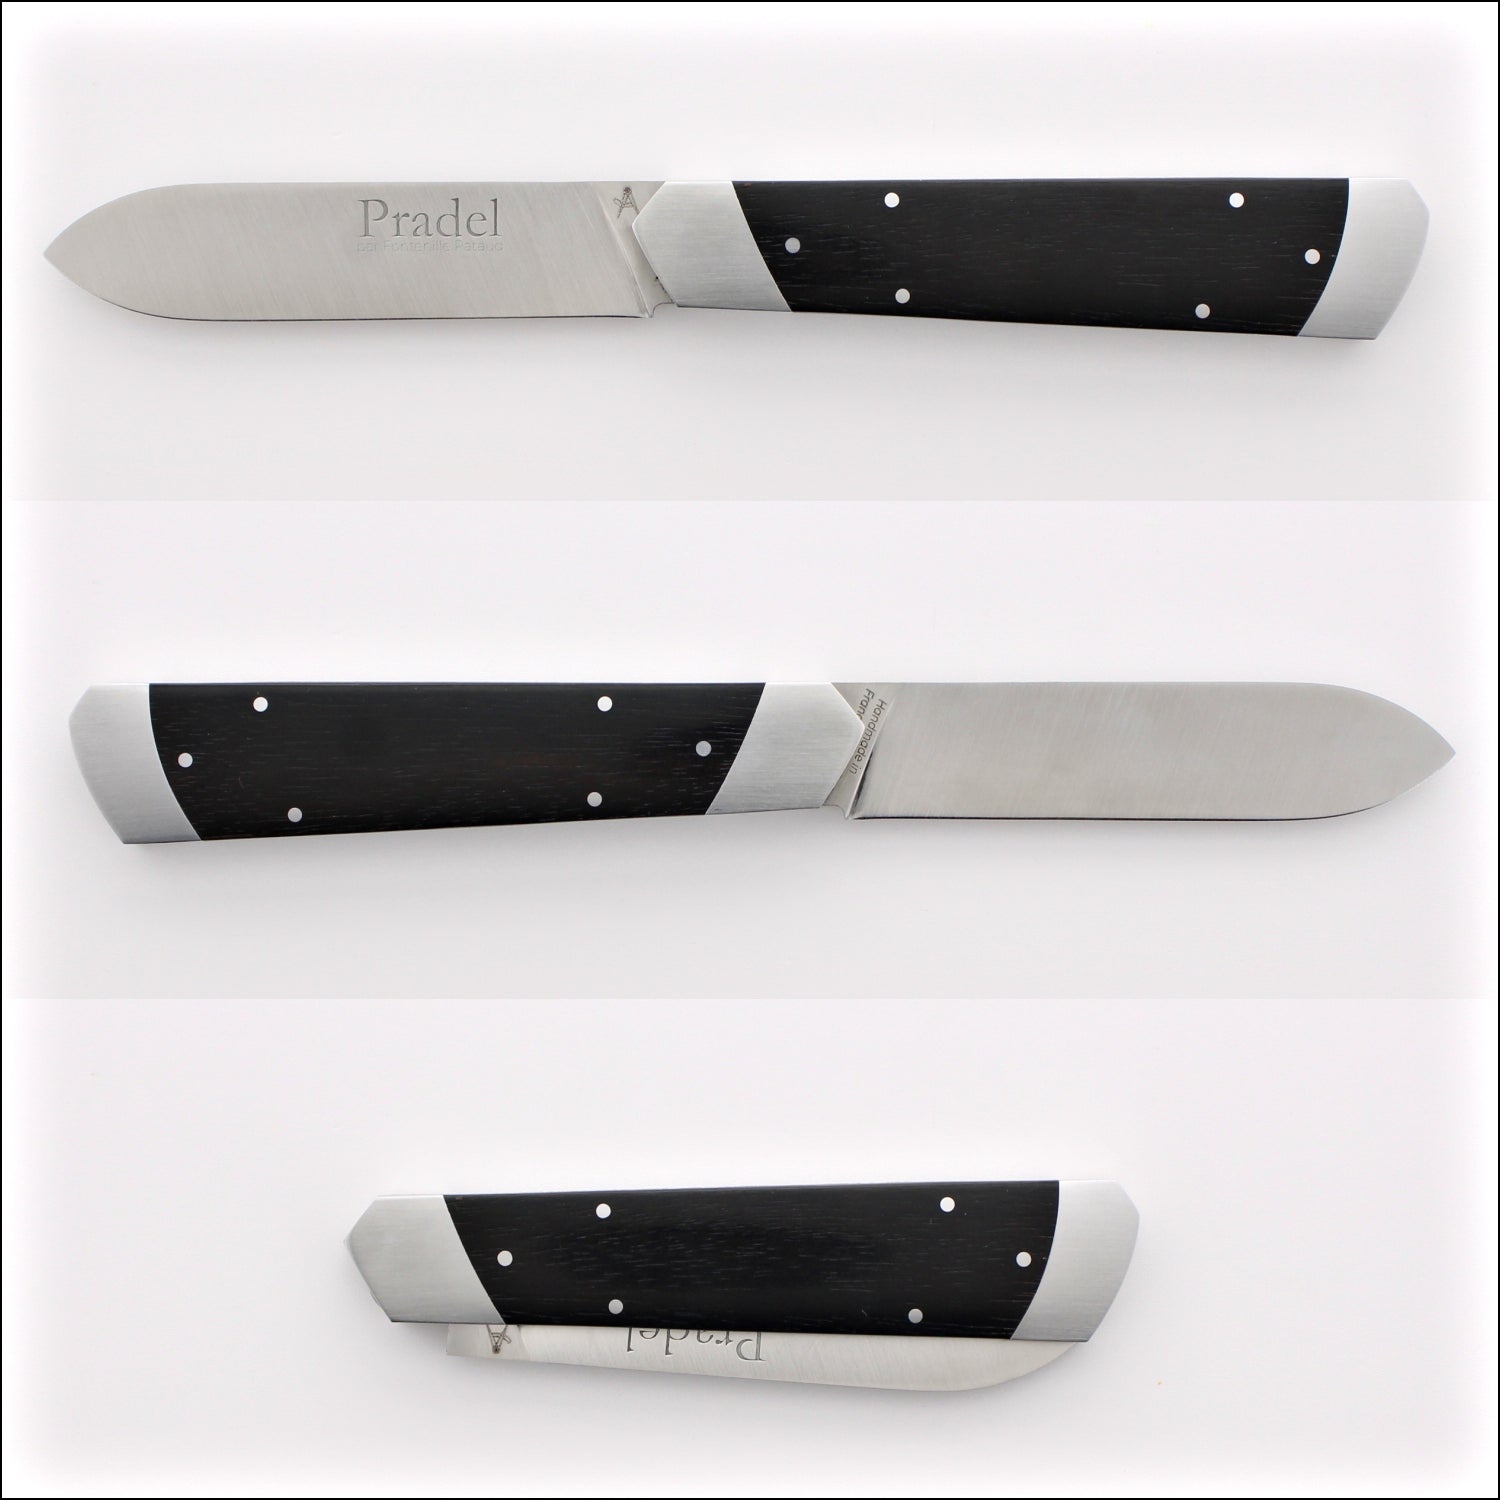 Pradel Folding Knife Ebony Handle & Lock-Back by Fontenille Pataud